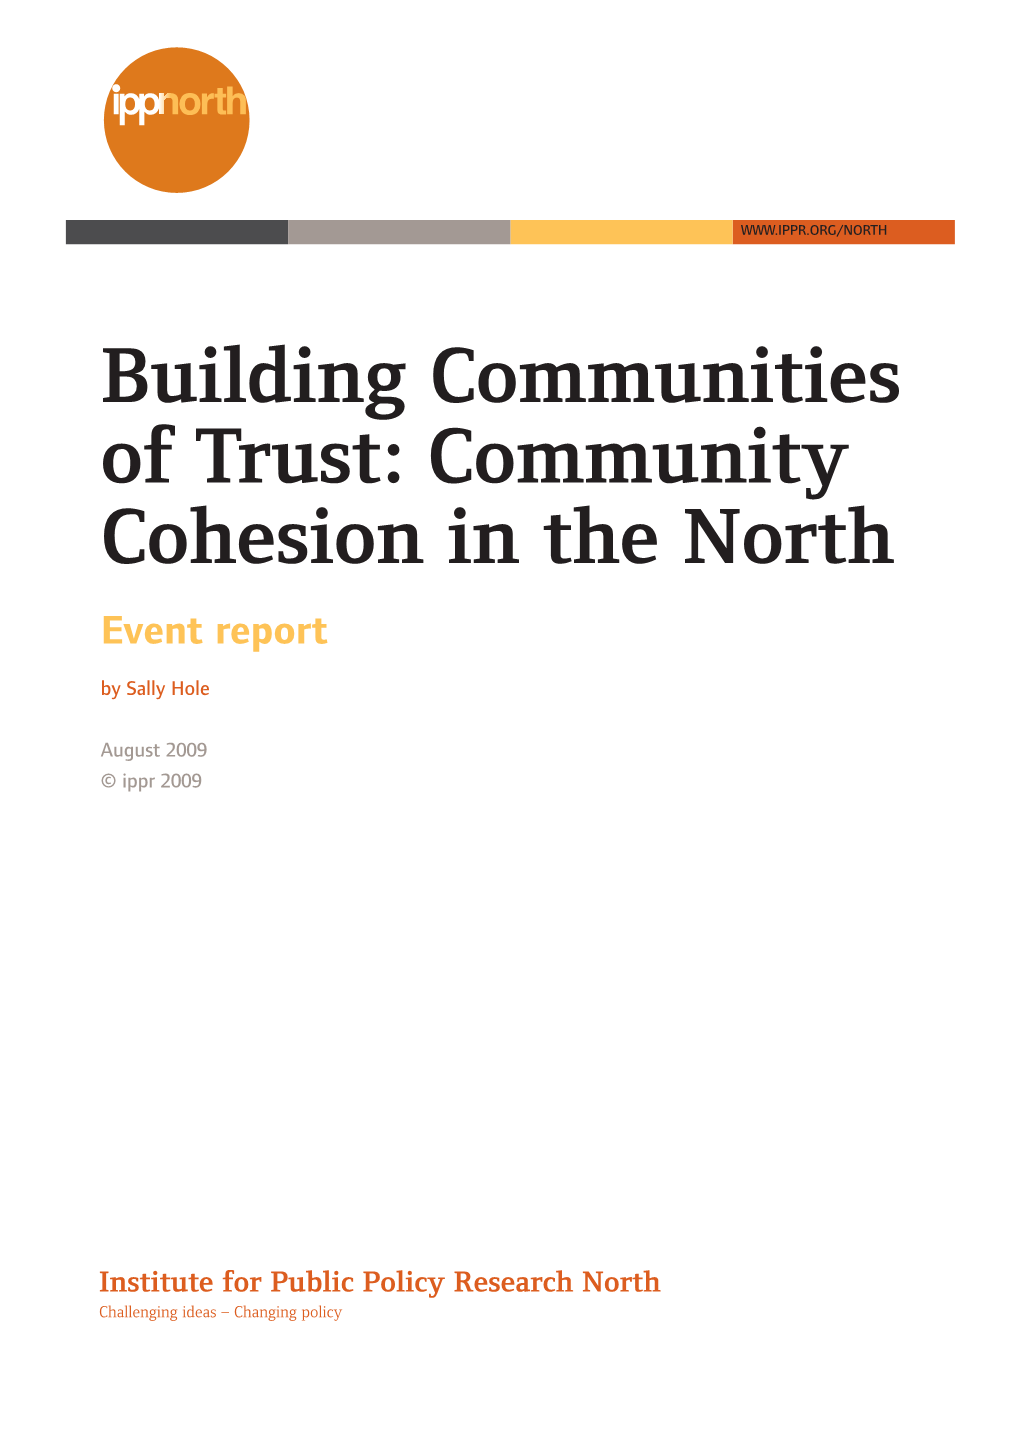 Building Communities of Trust Event Report:Layout 1.Qxd